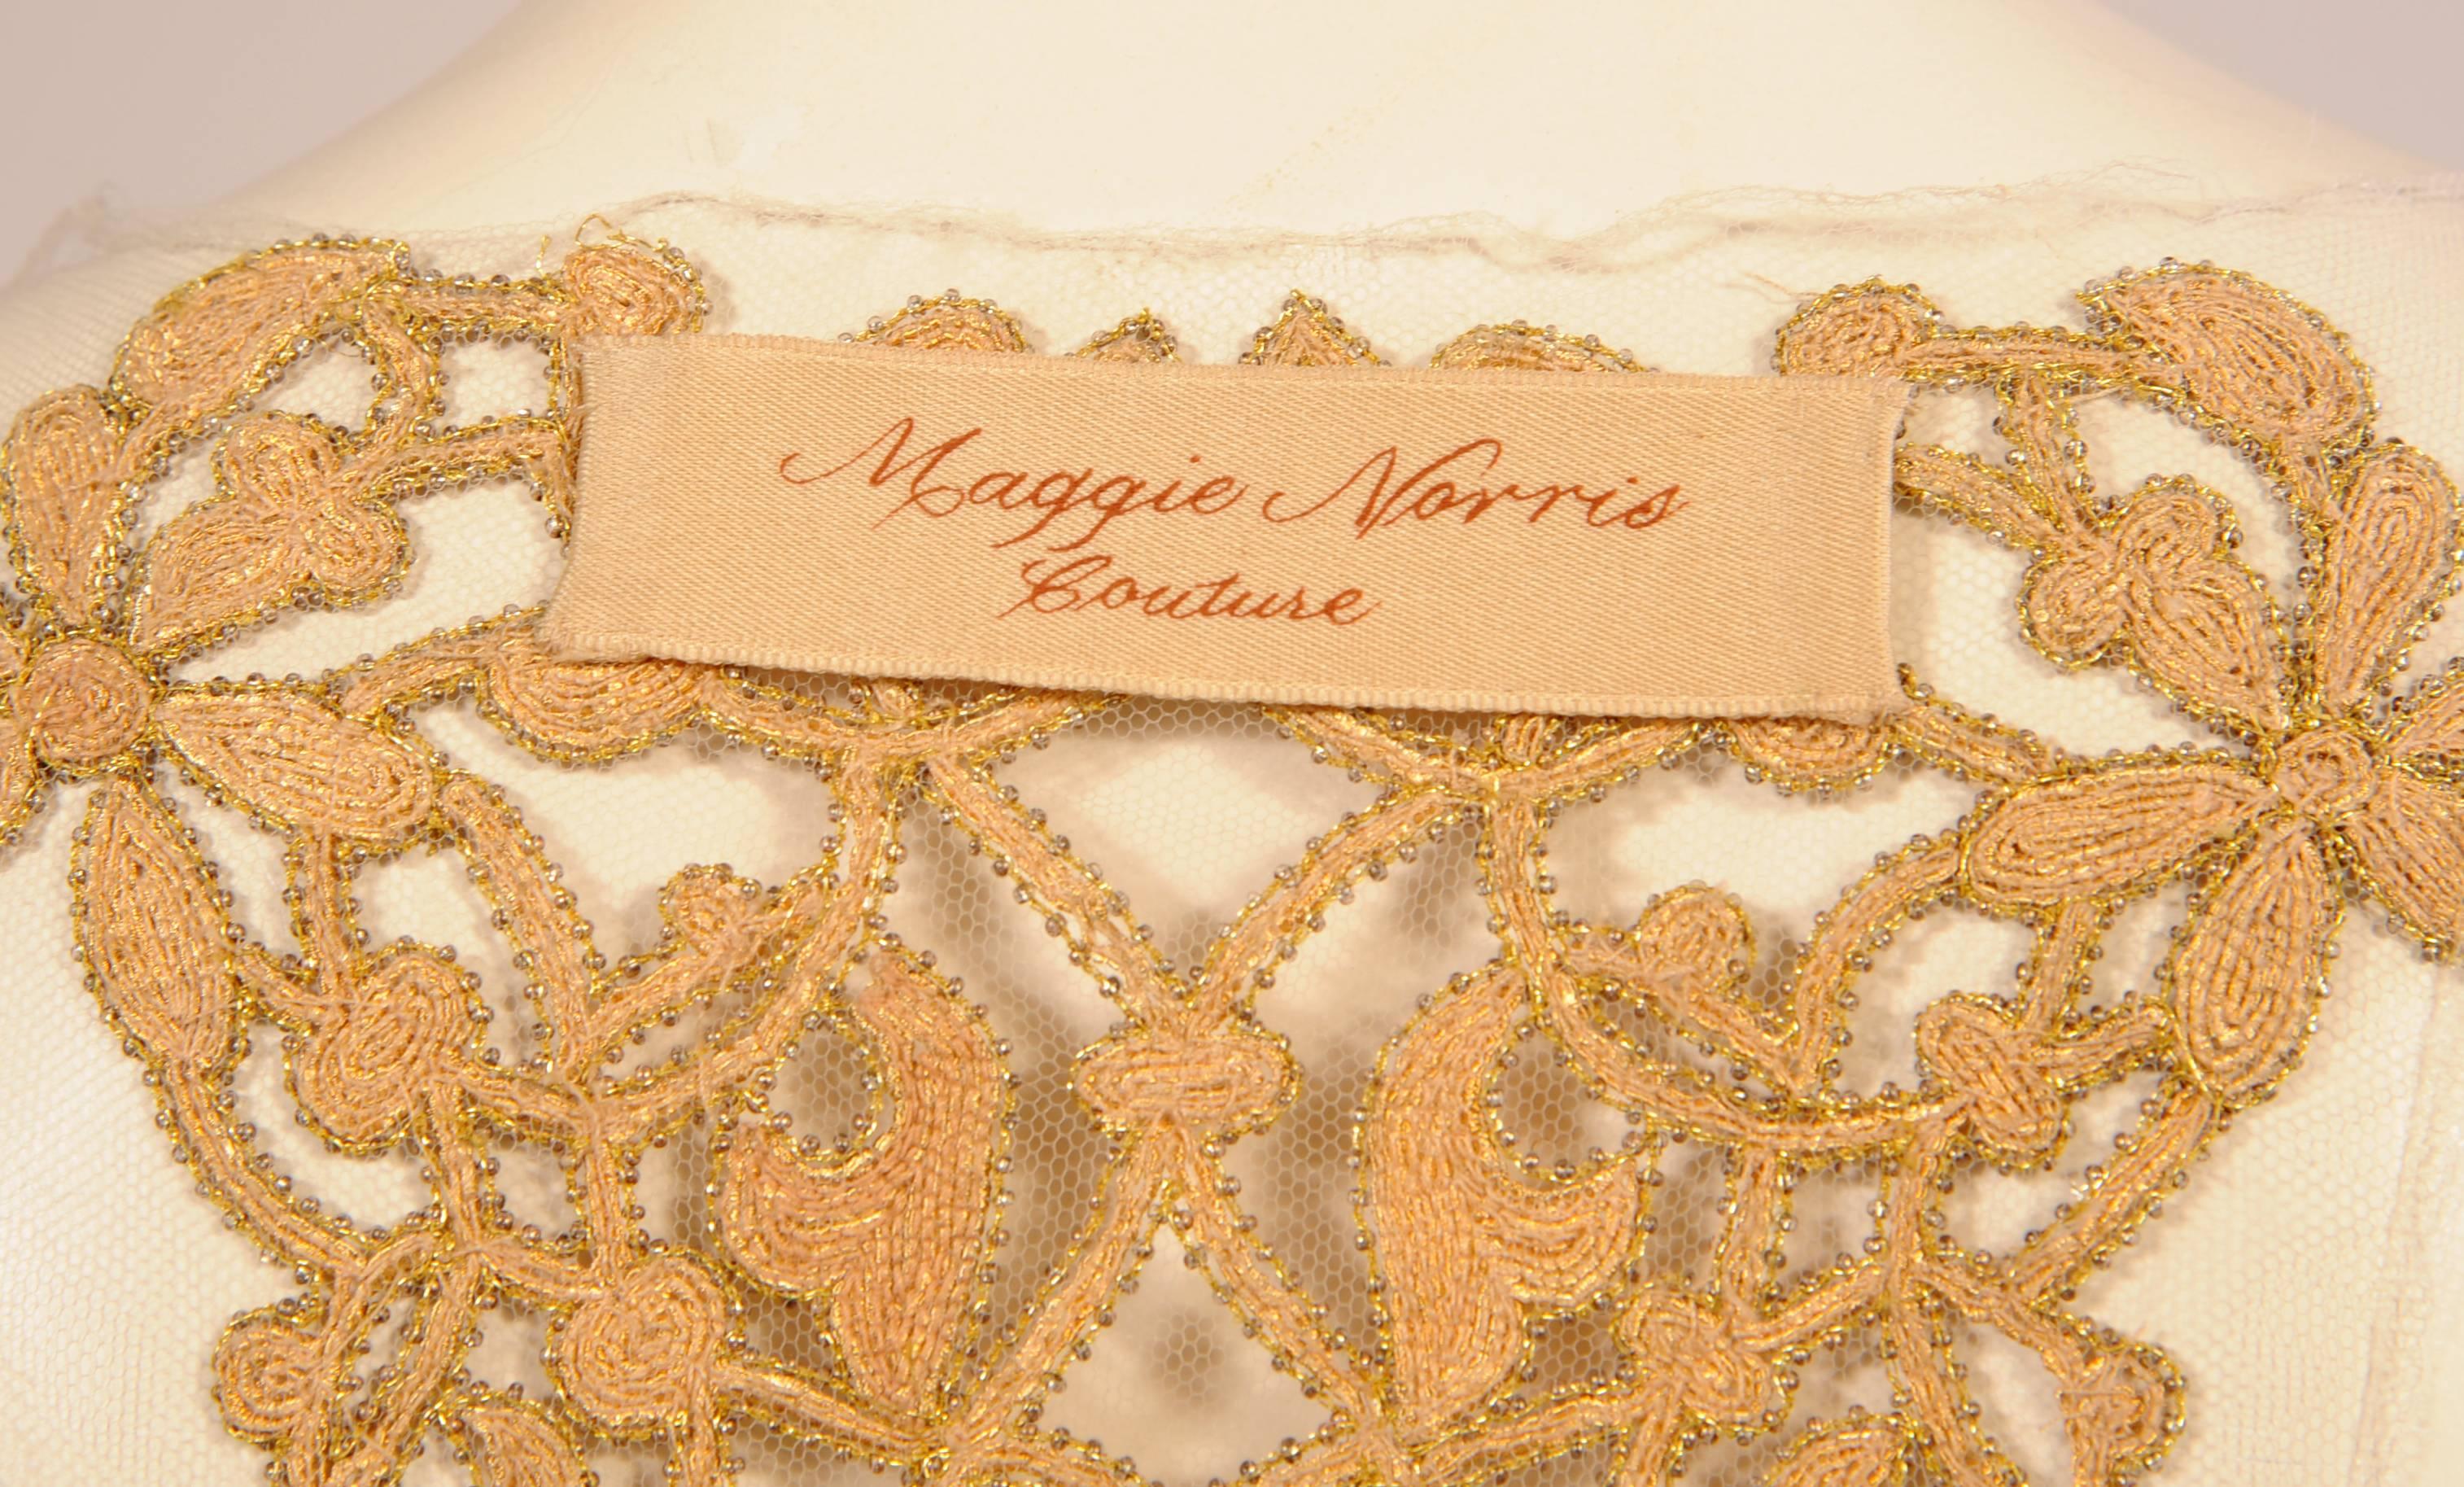  Lesage Paris Tulle Bodice Hand Sewn Gold Beads Soutache Maggie Norris Couture 1